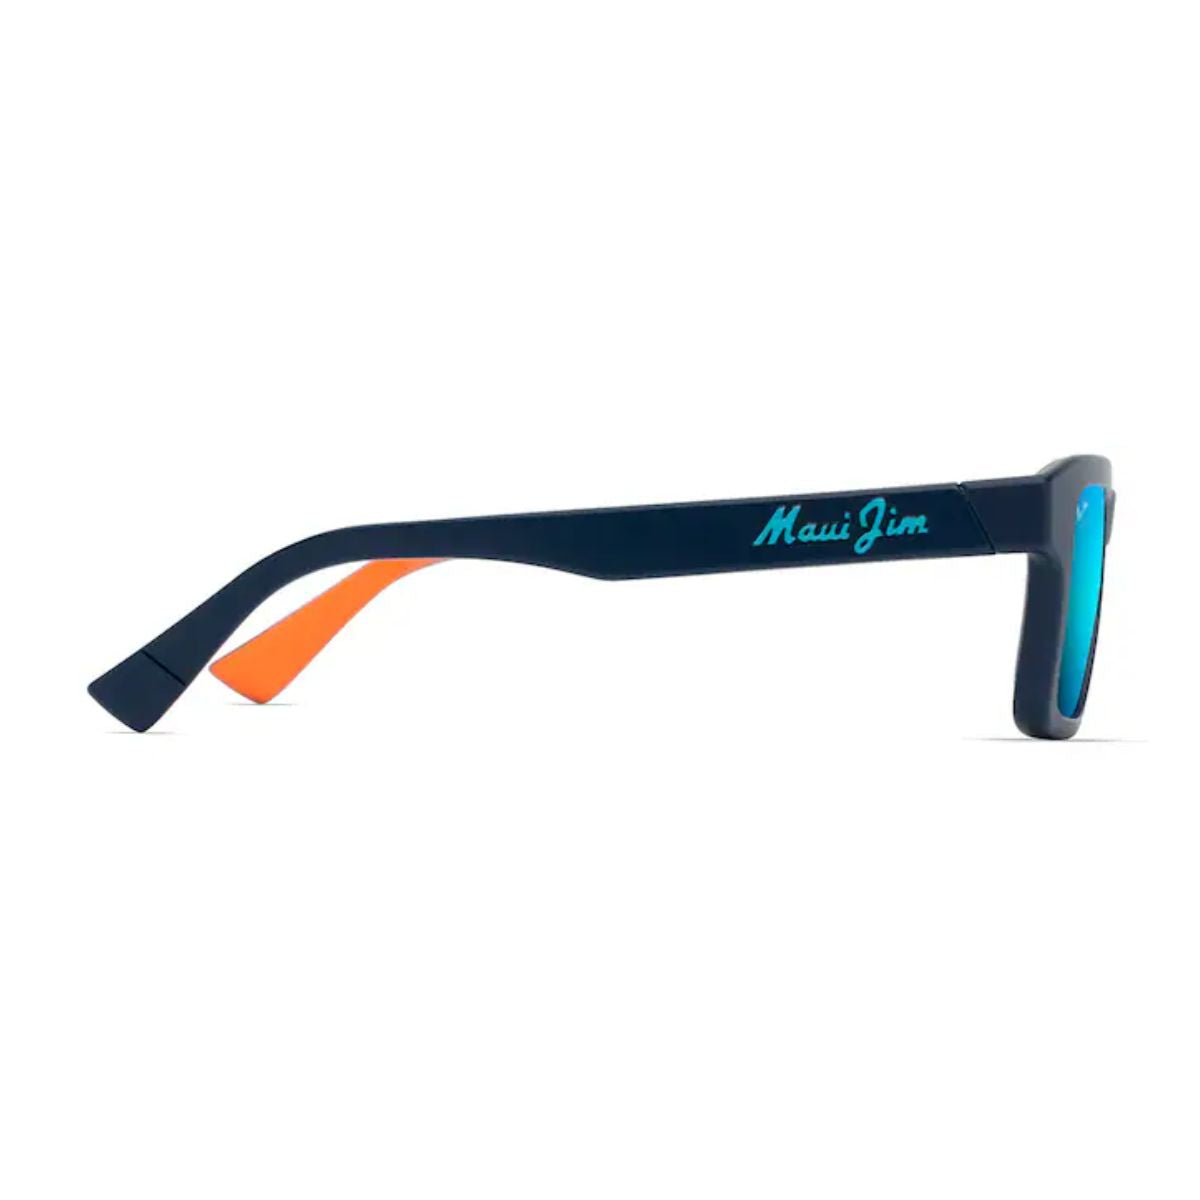 "Buy Latest Maui Jim Square Polarized Sunglasses For Mens At Optorium"